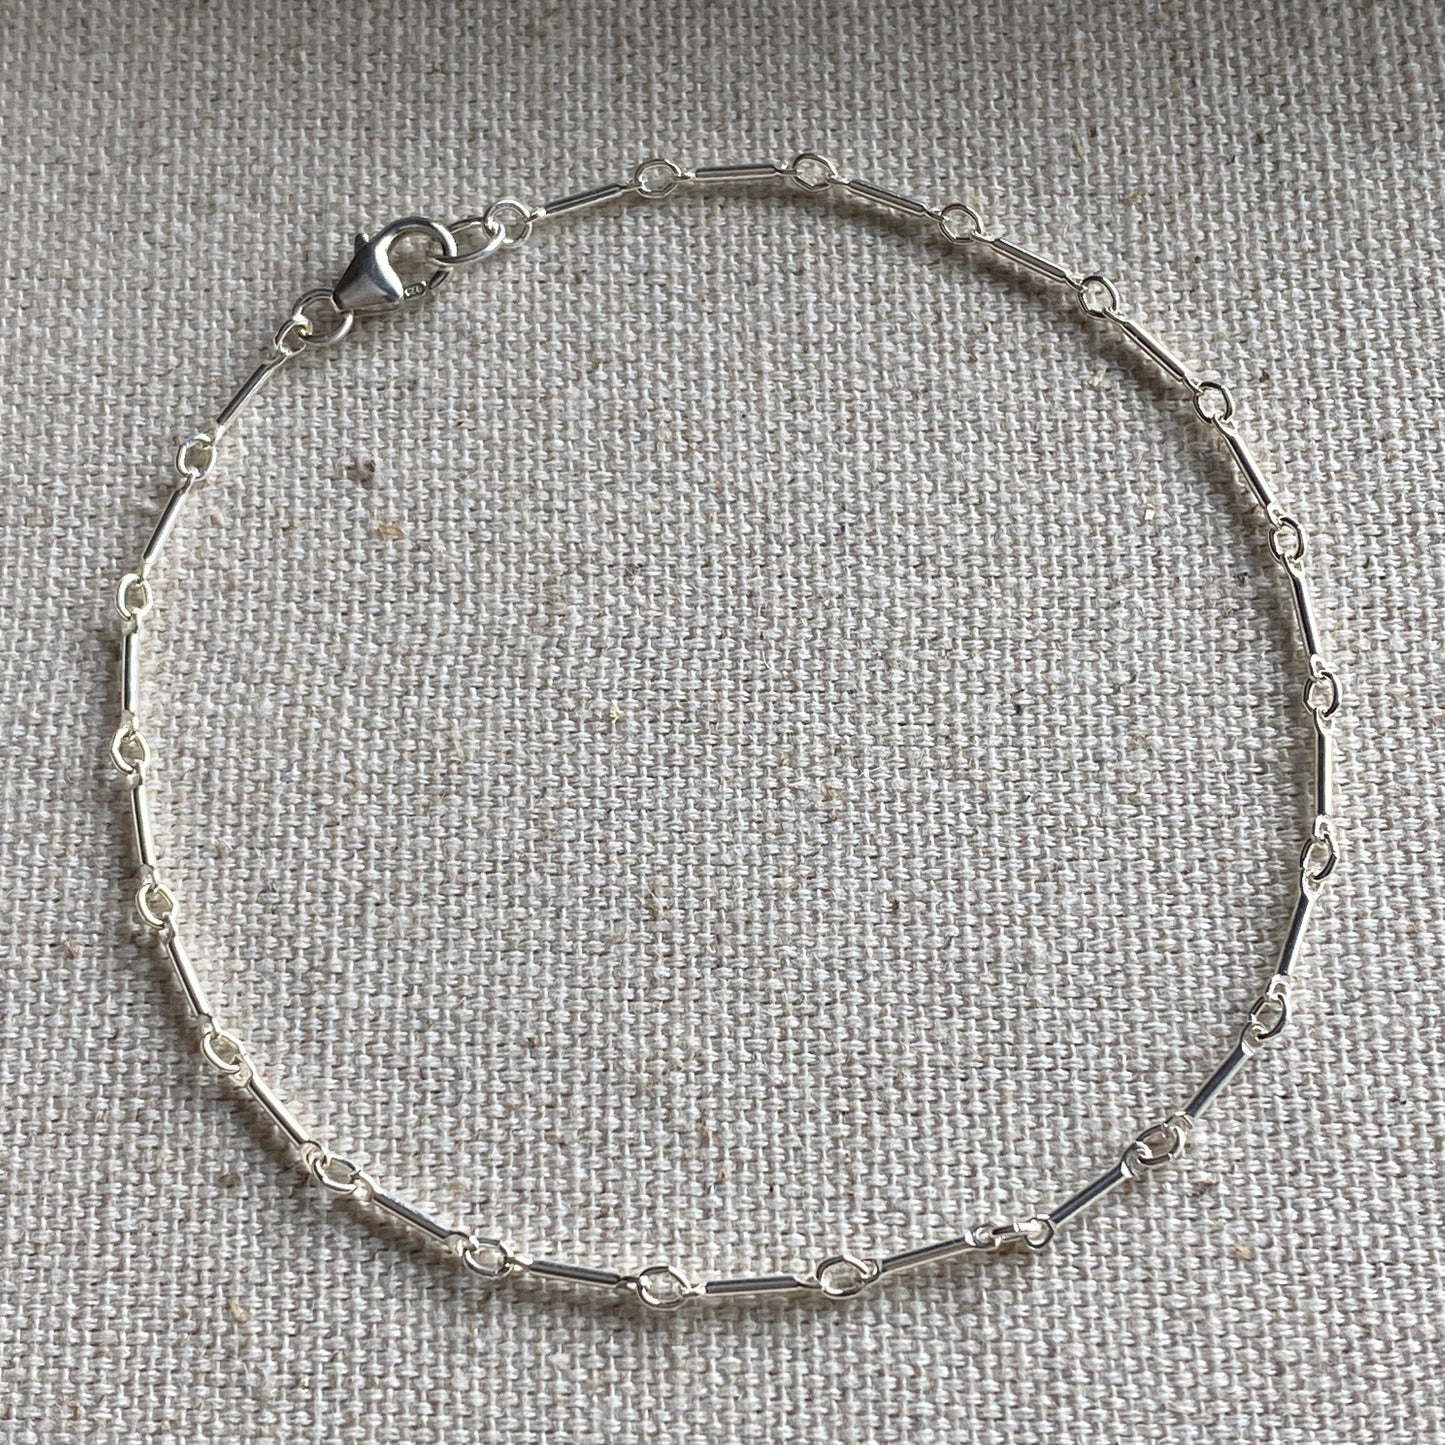 Silver Bracelet Sterling Bar Link Everyday Jewelry